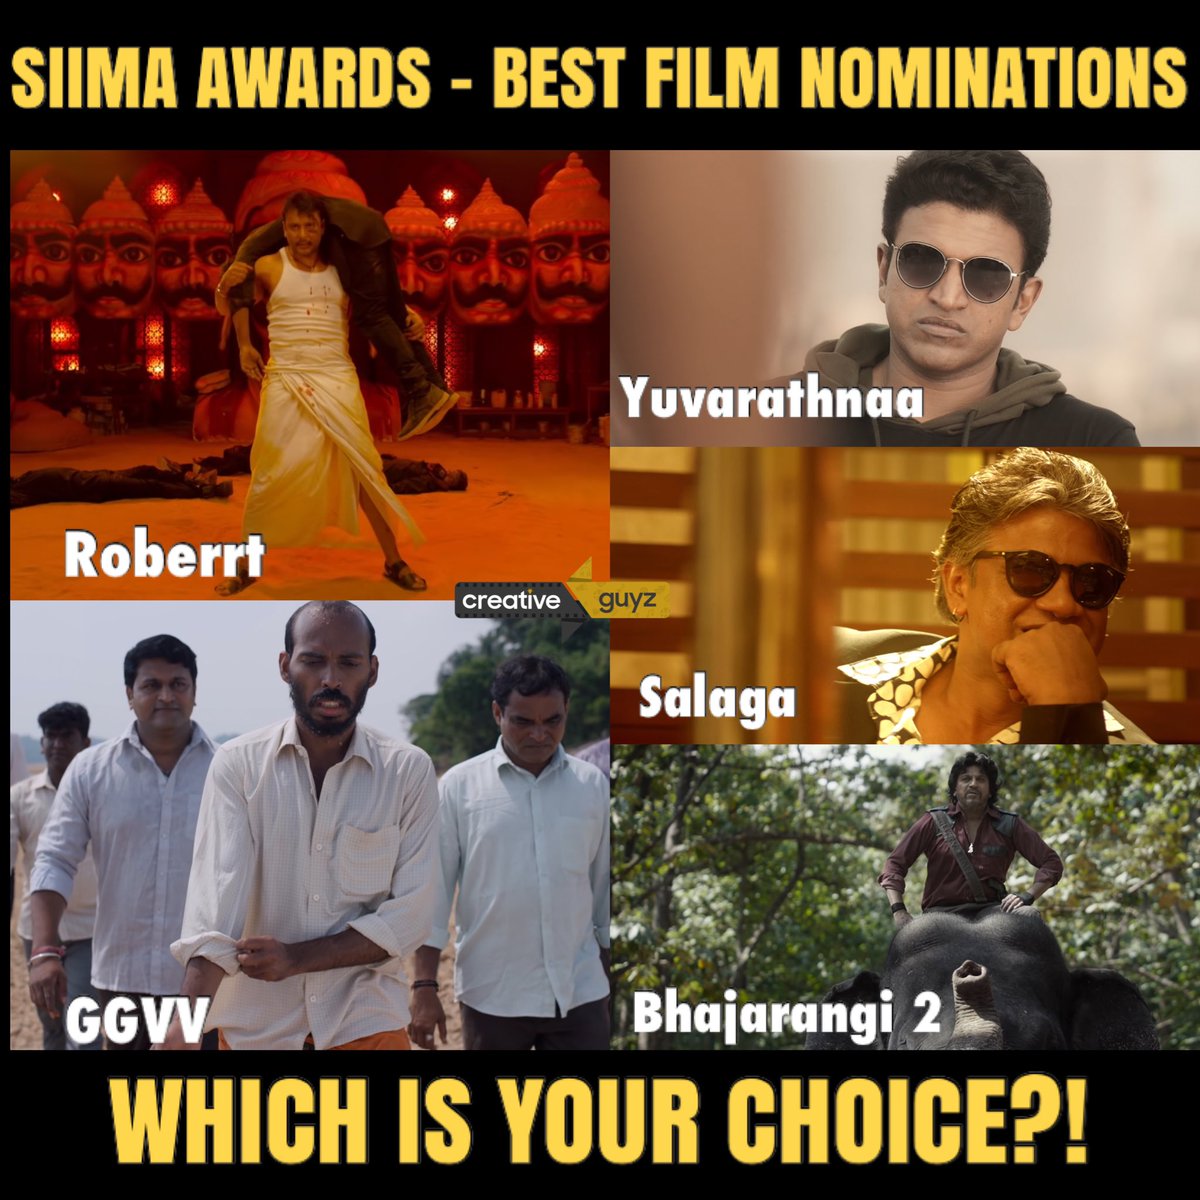 Which is the Best film of 2021 in your Opinion?!
#SIIMA2022 #SiimaNominations 
#Roberrt #GGVV #Yuvarathnaa #Salaga #Bhajarangi2 #CreativeGuyz